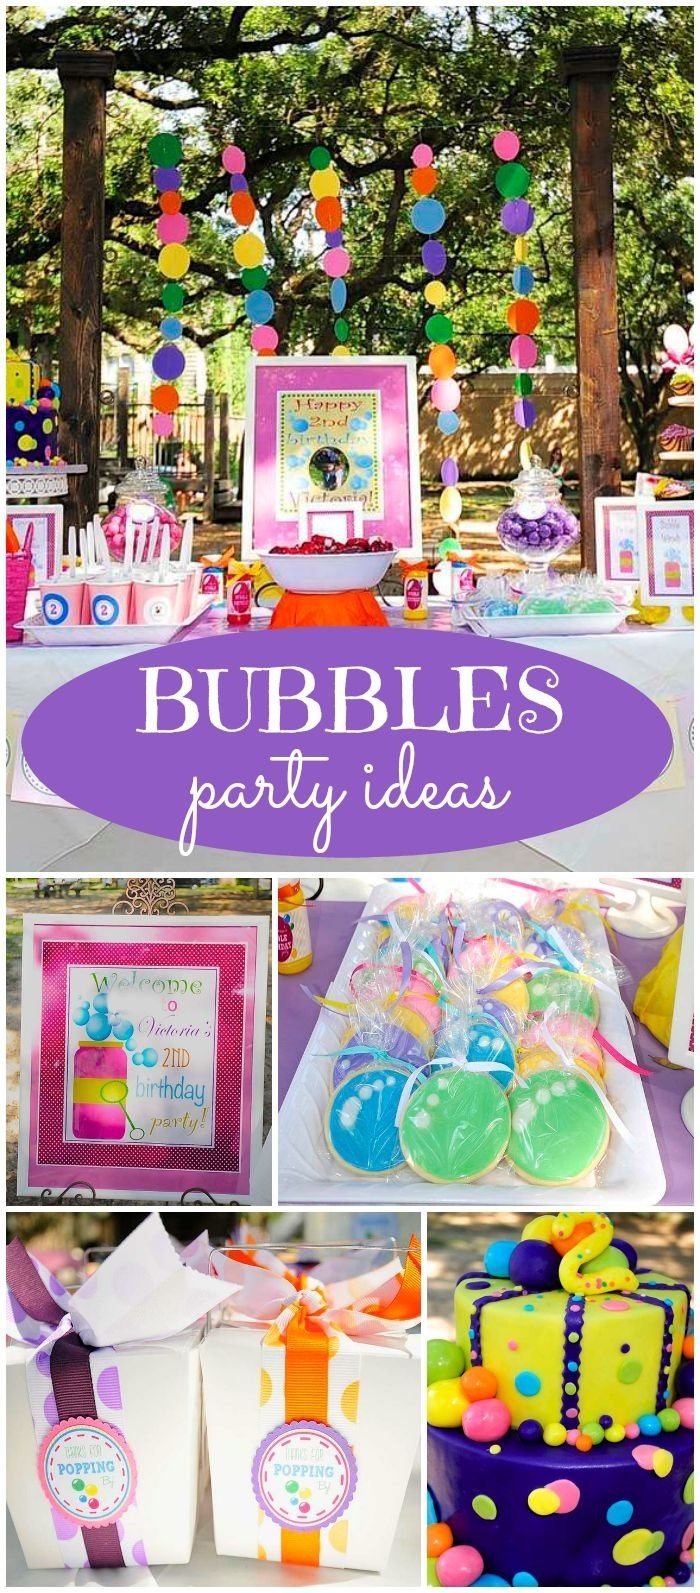 10 Unique Ideas For A Birthday Party bubbles birthday victorias bubbles themed 2nd birthday party 1 2022